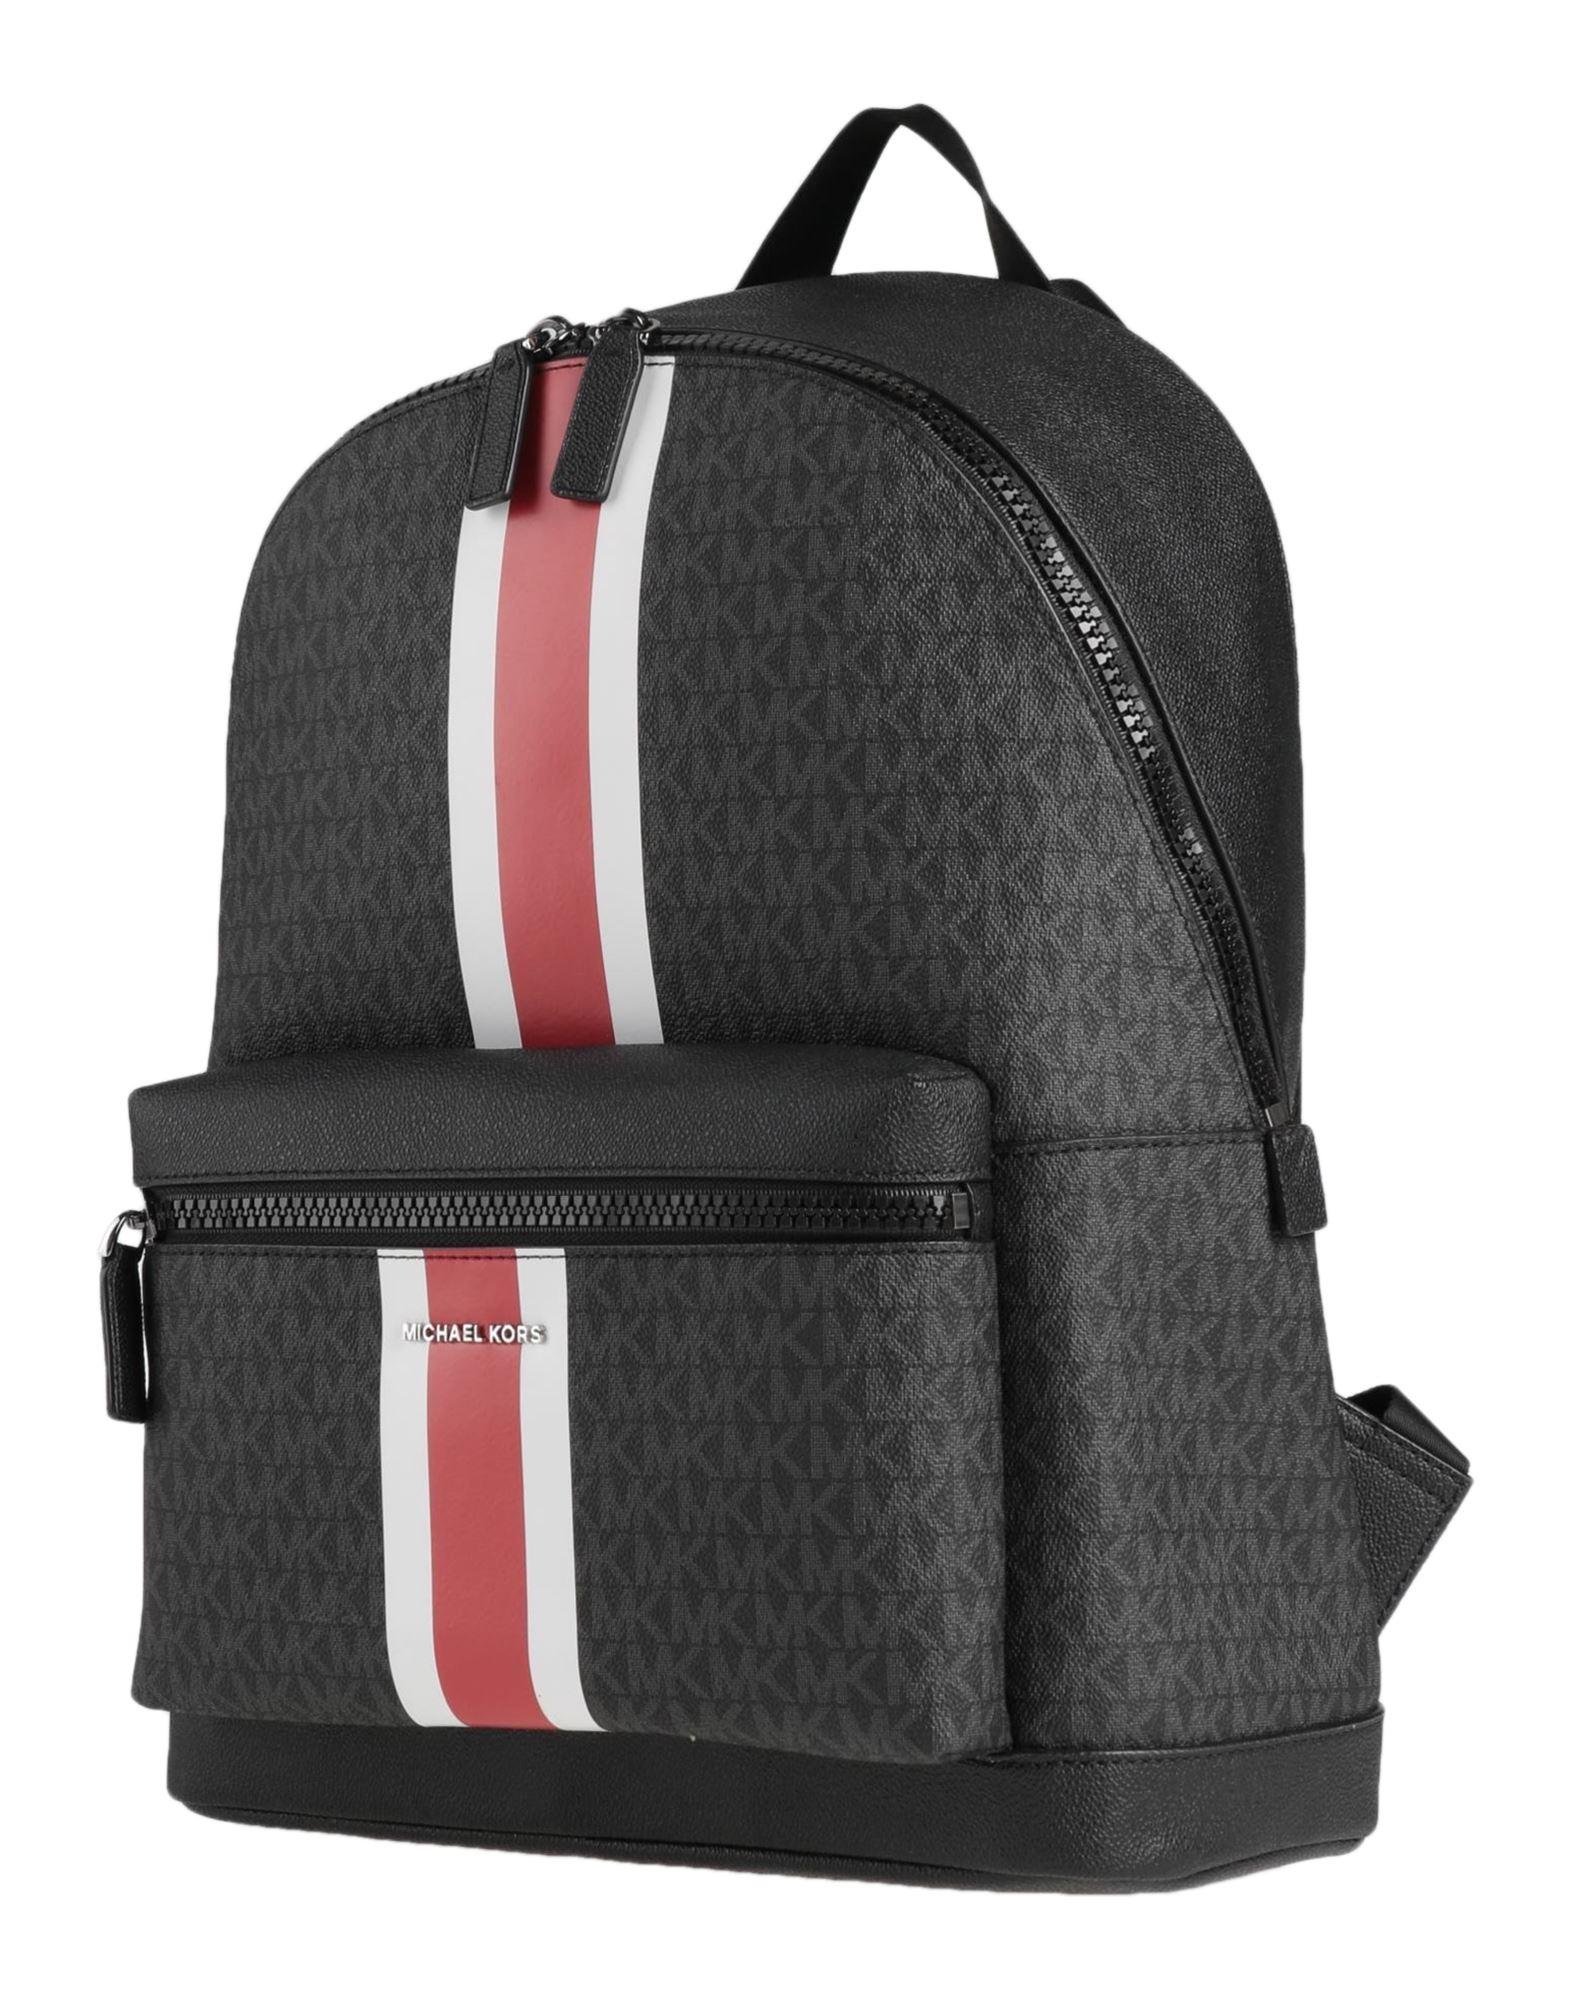 MICHAEL KORS MENS Hudson Pebbled Leather and Logo Stripe Backpack